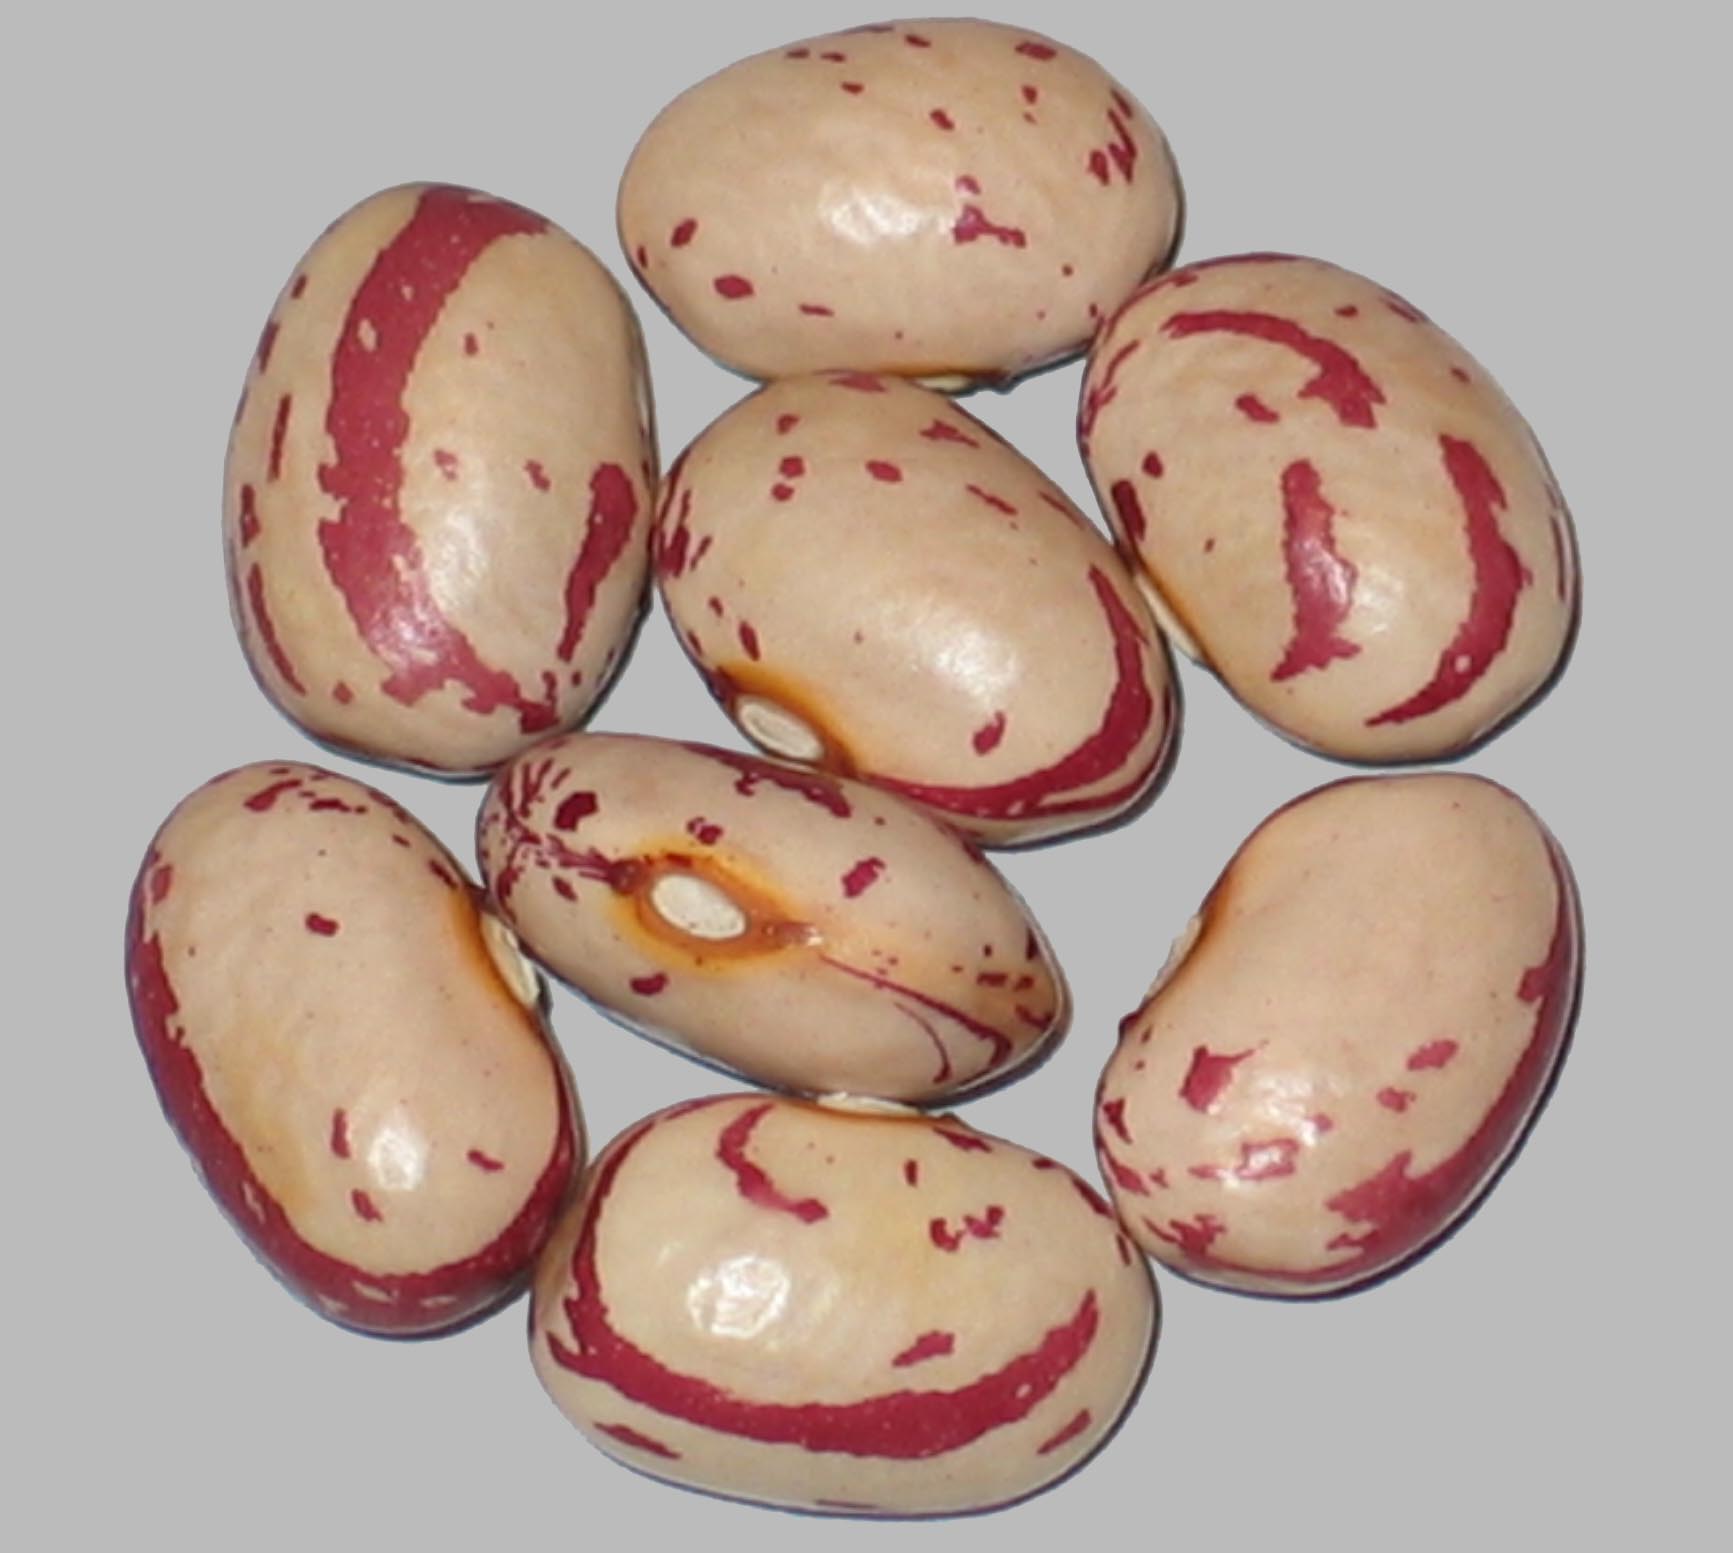 image of Capirame beans